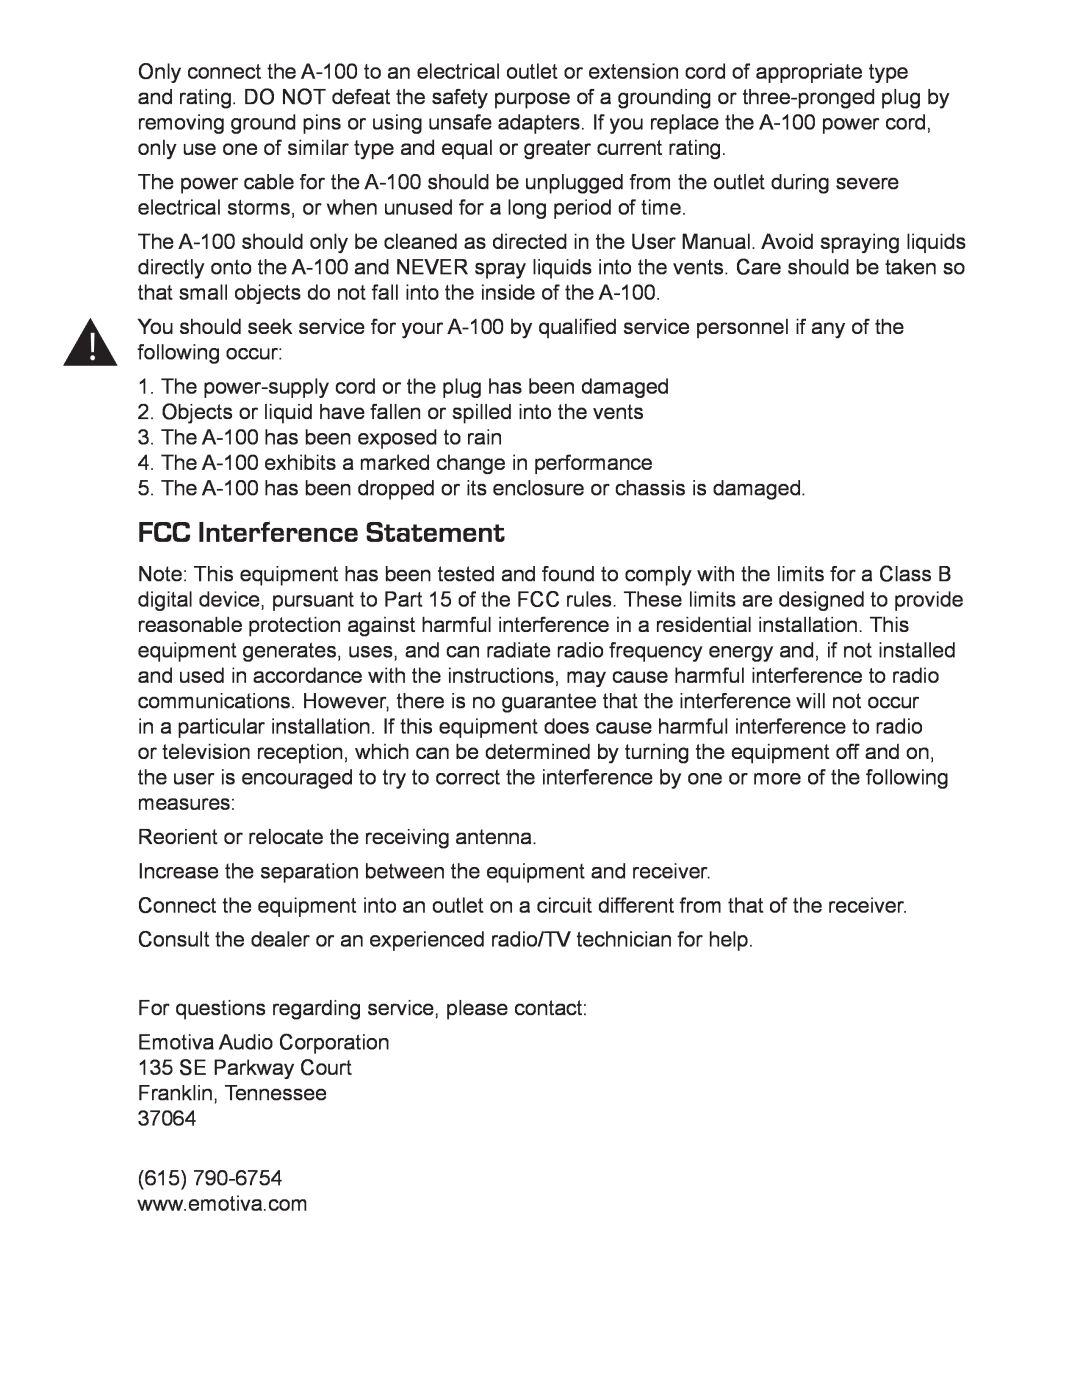 Emotiva A-100 user manual FCC Interference Statement 